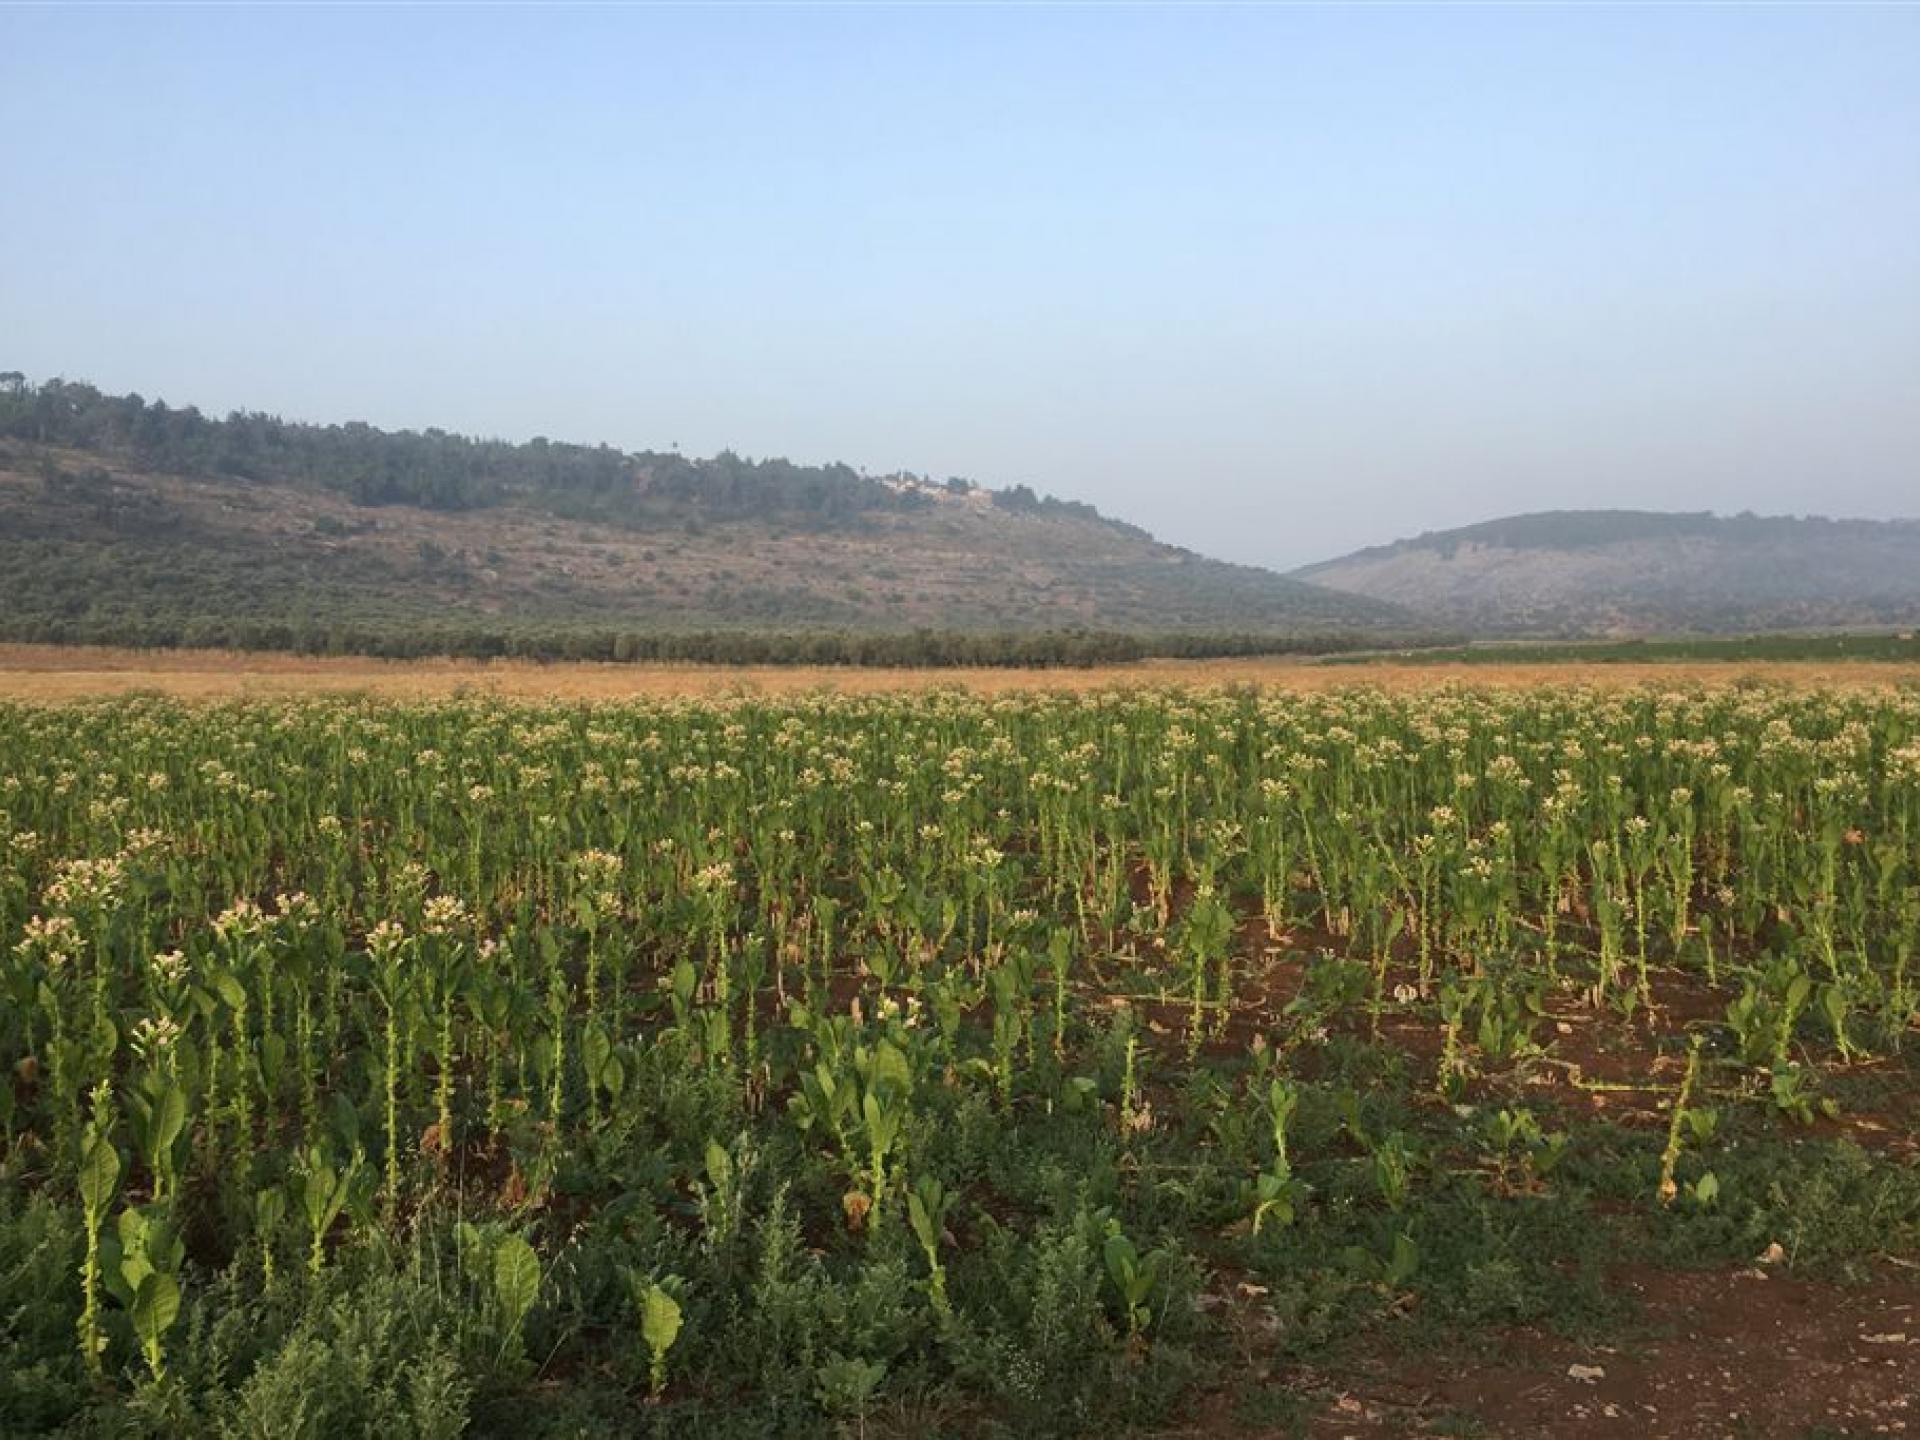 Ya'abed-Dotan Checkpoint: Tobacco fields in flower